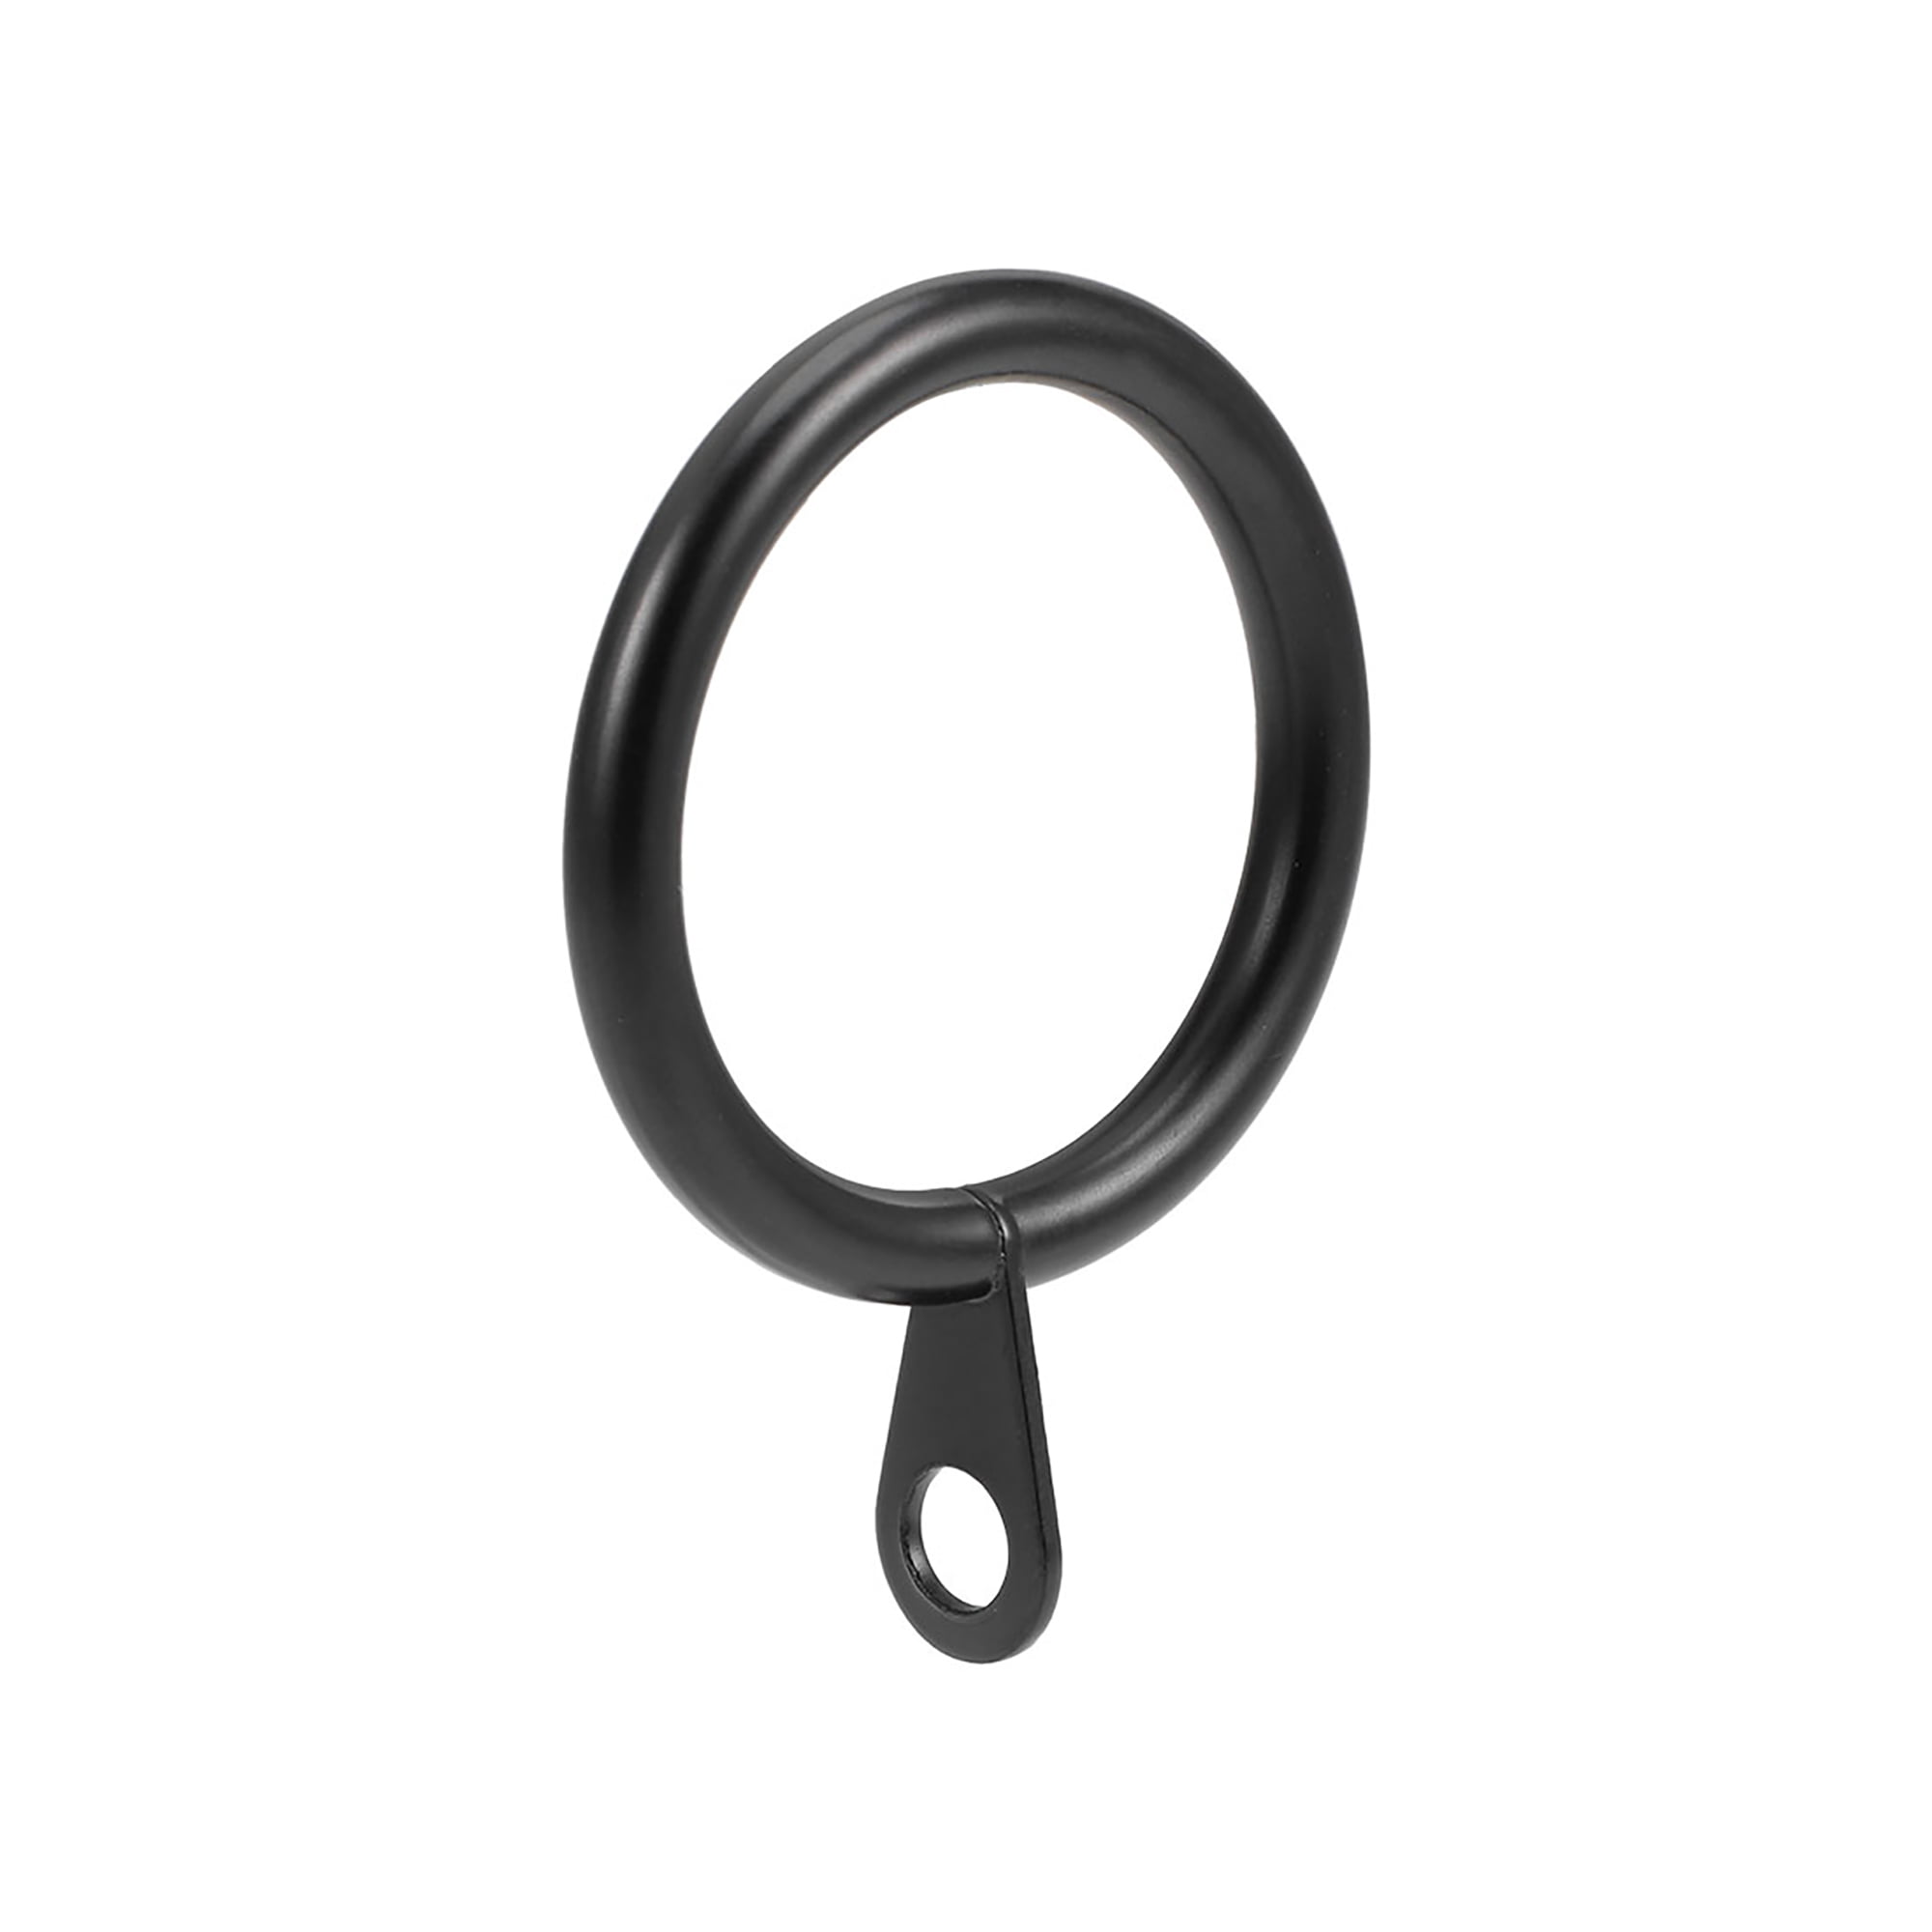 uxcell® 16pcs Window Curtain Drapery Eyelet Ring Fits 28mm Diameter Rods Black 